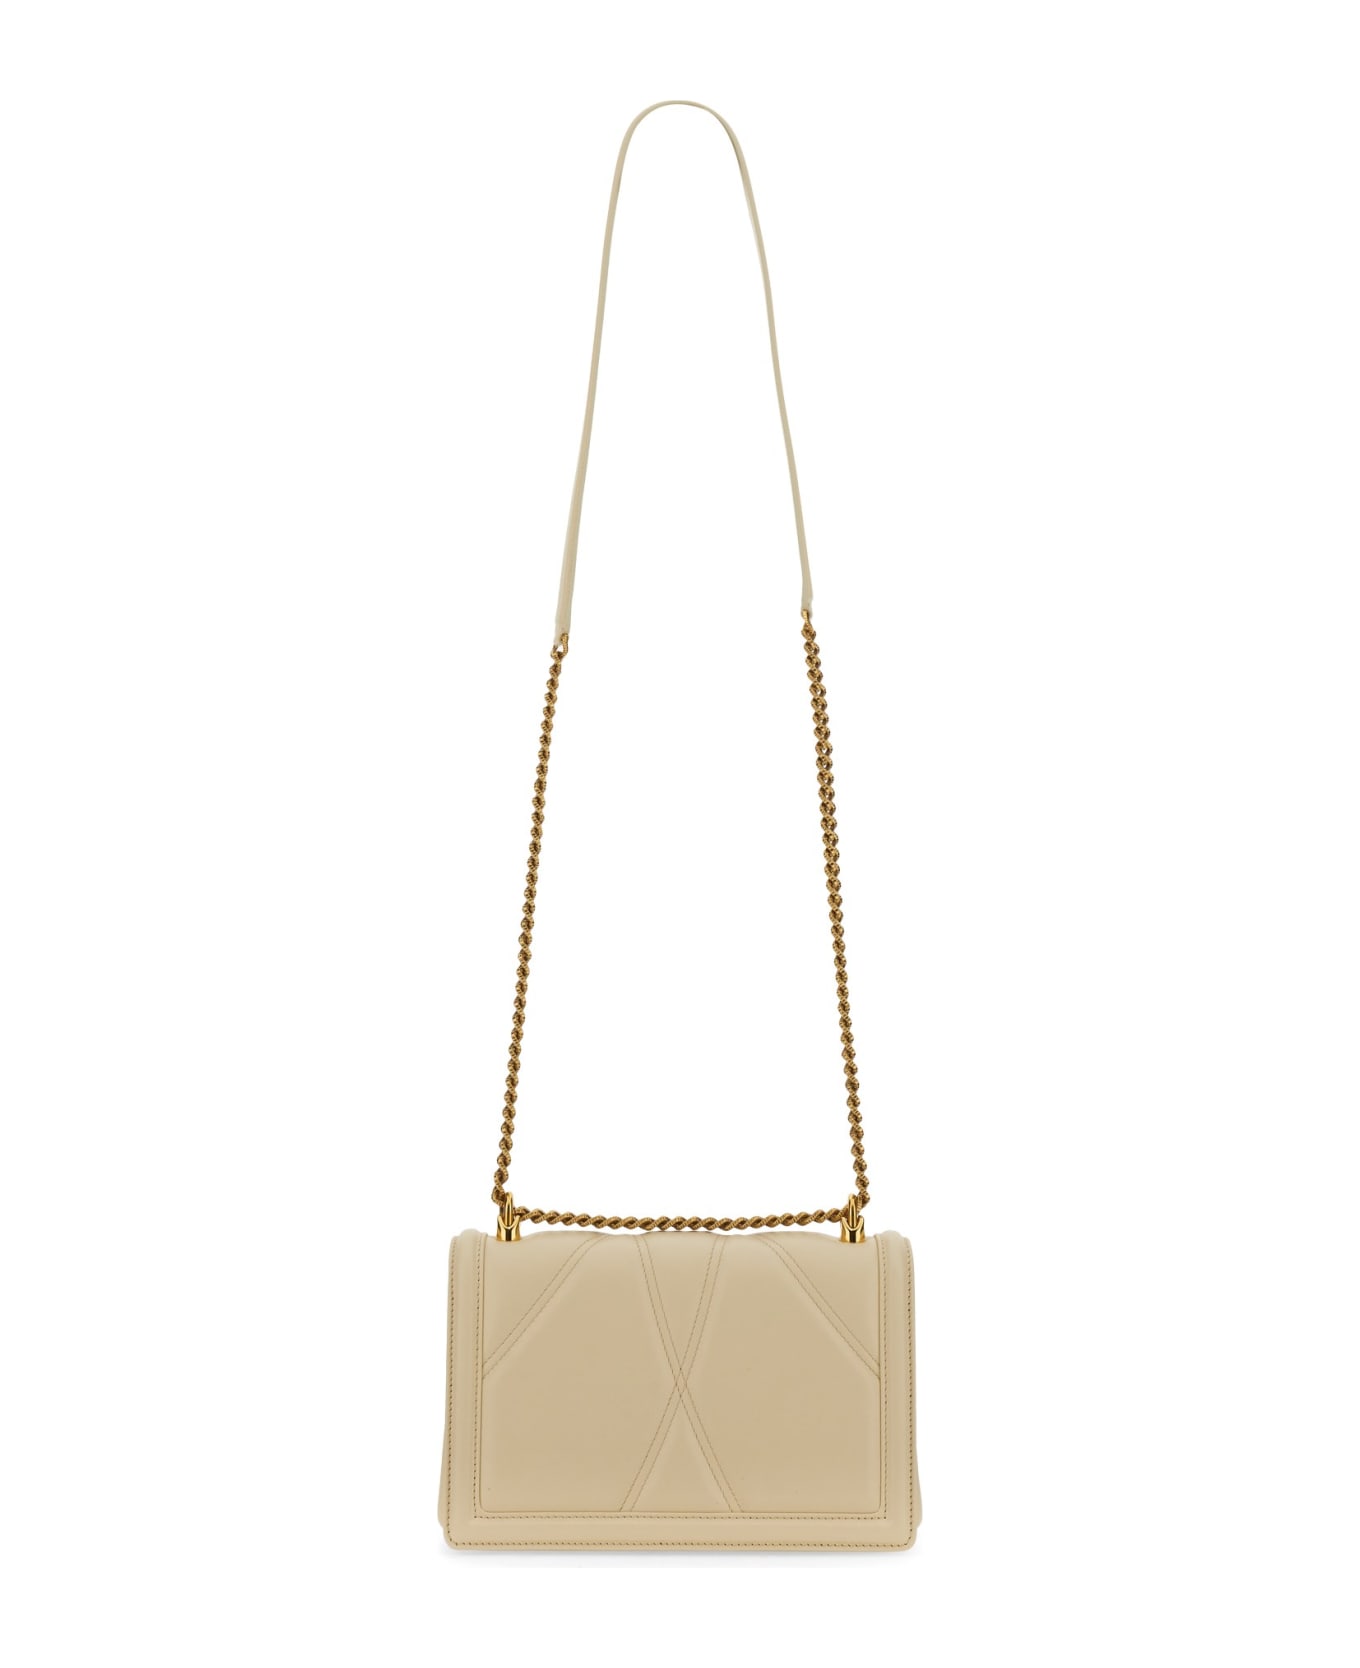 Dolce & Gabbana Devotion Shoulder Bag - Beige ショルダーバッグ